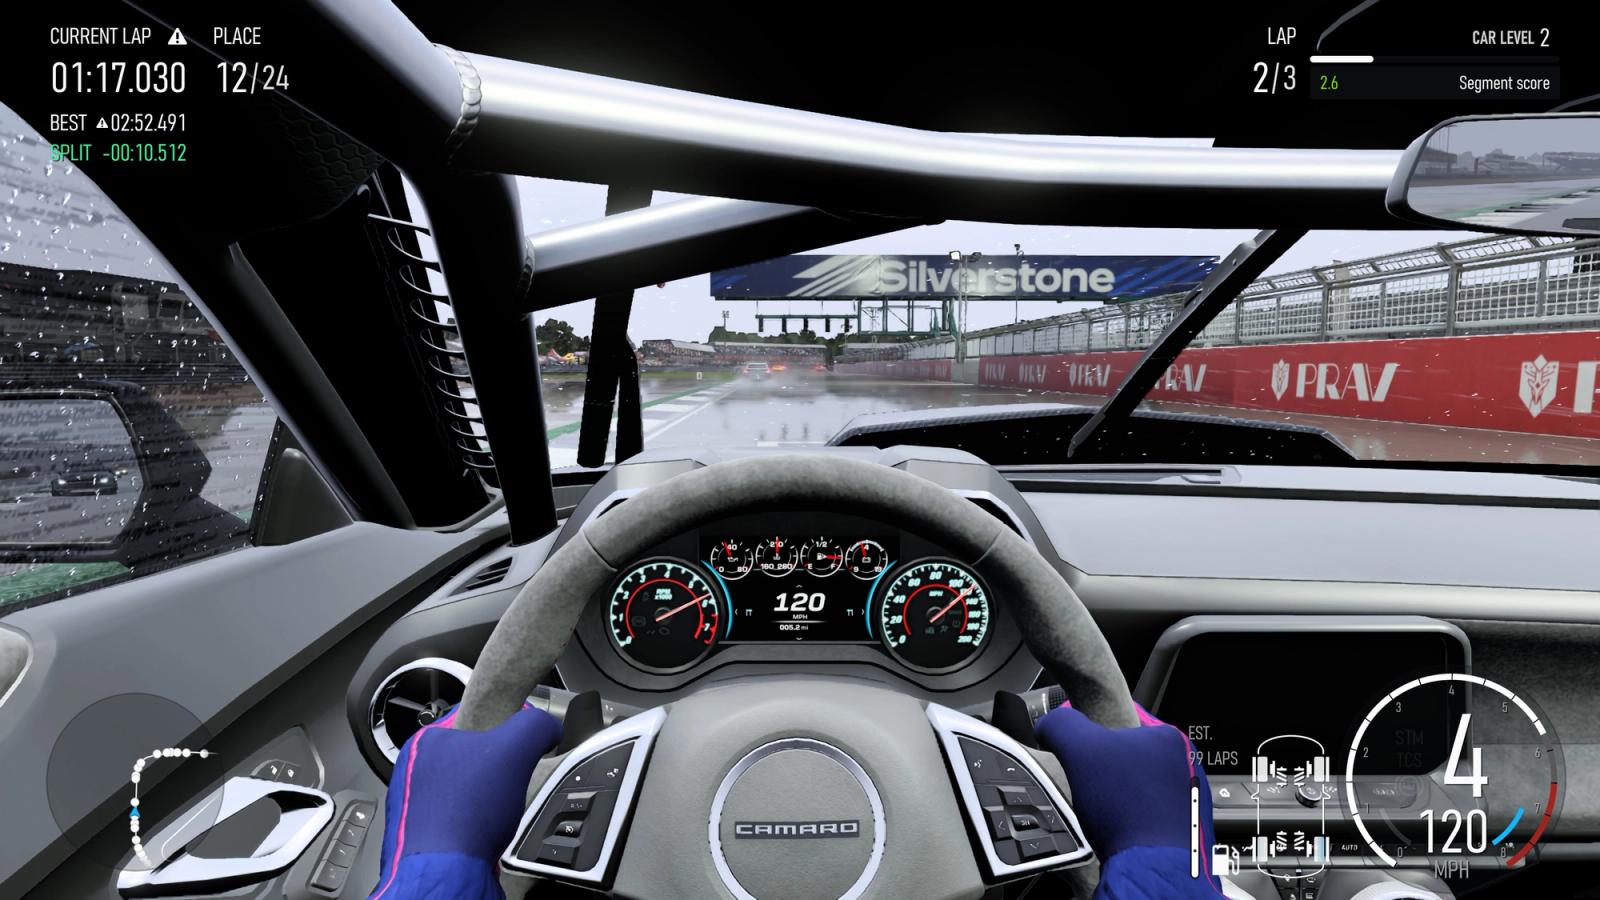 Forza Motorsport dynamic weather